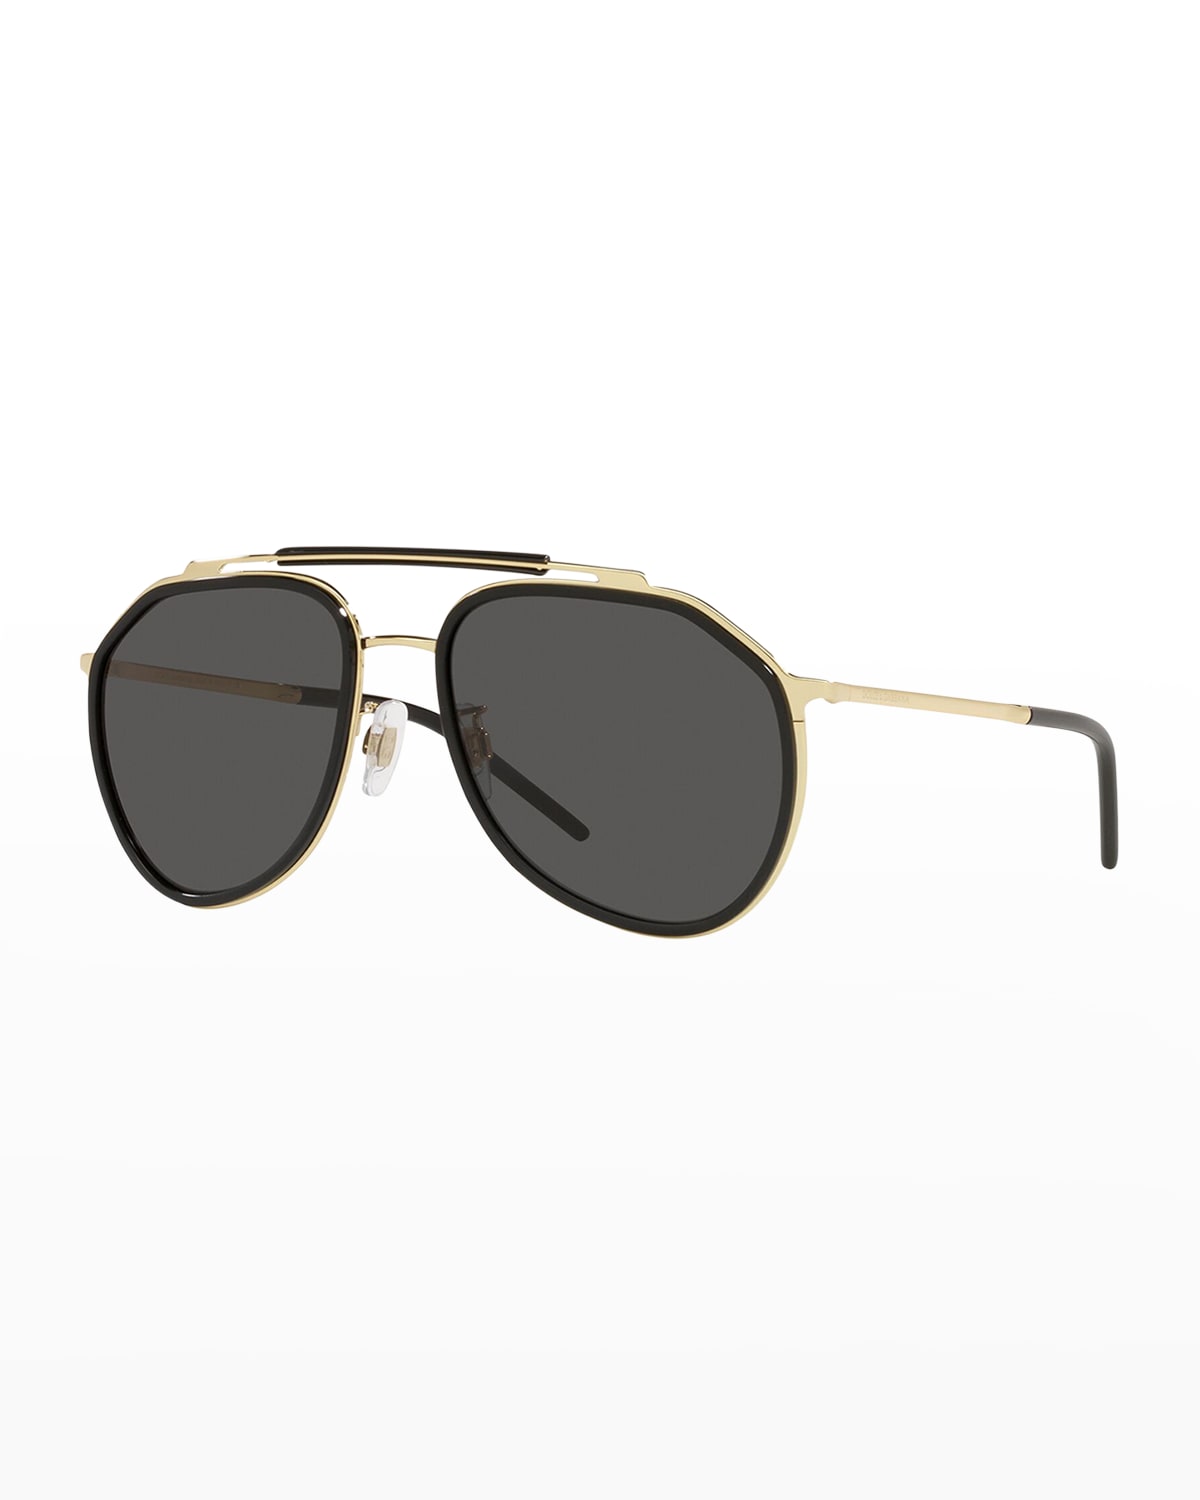 Men's Two-Tone Aviator Sunglasses